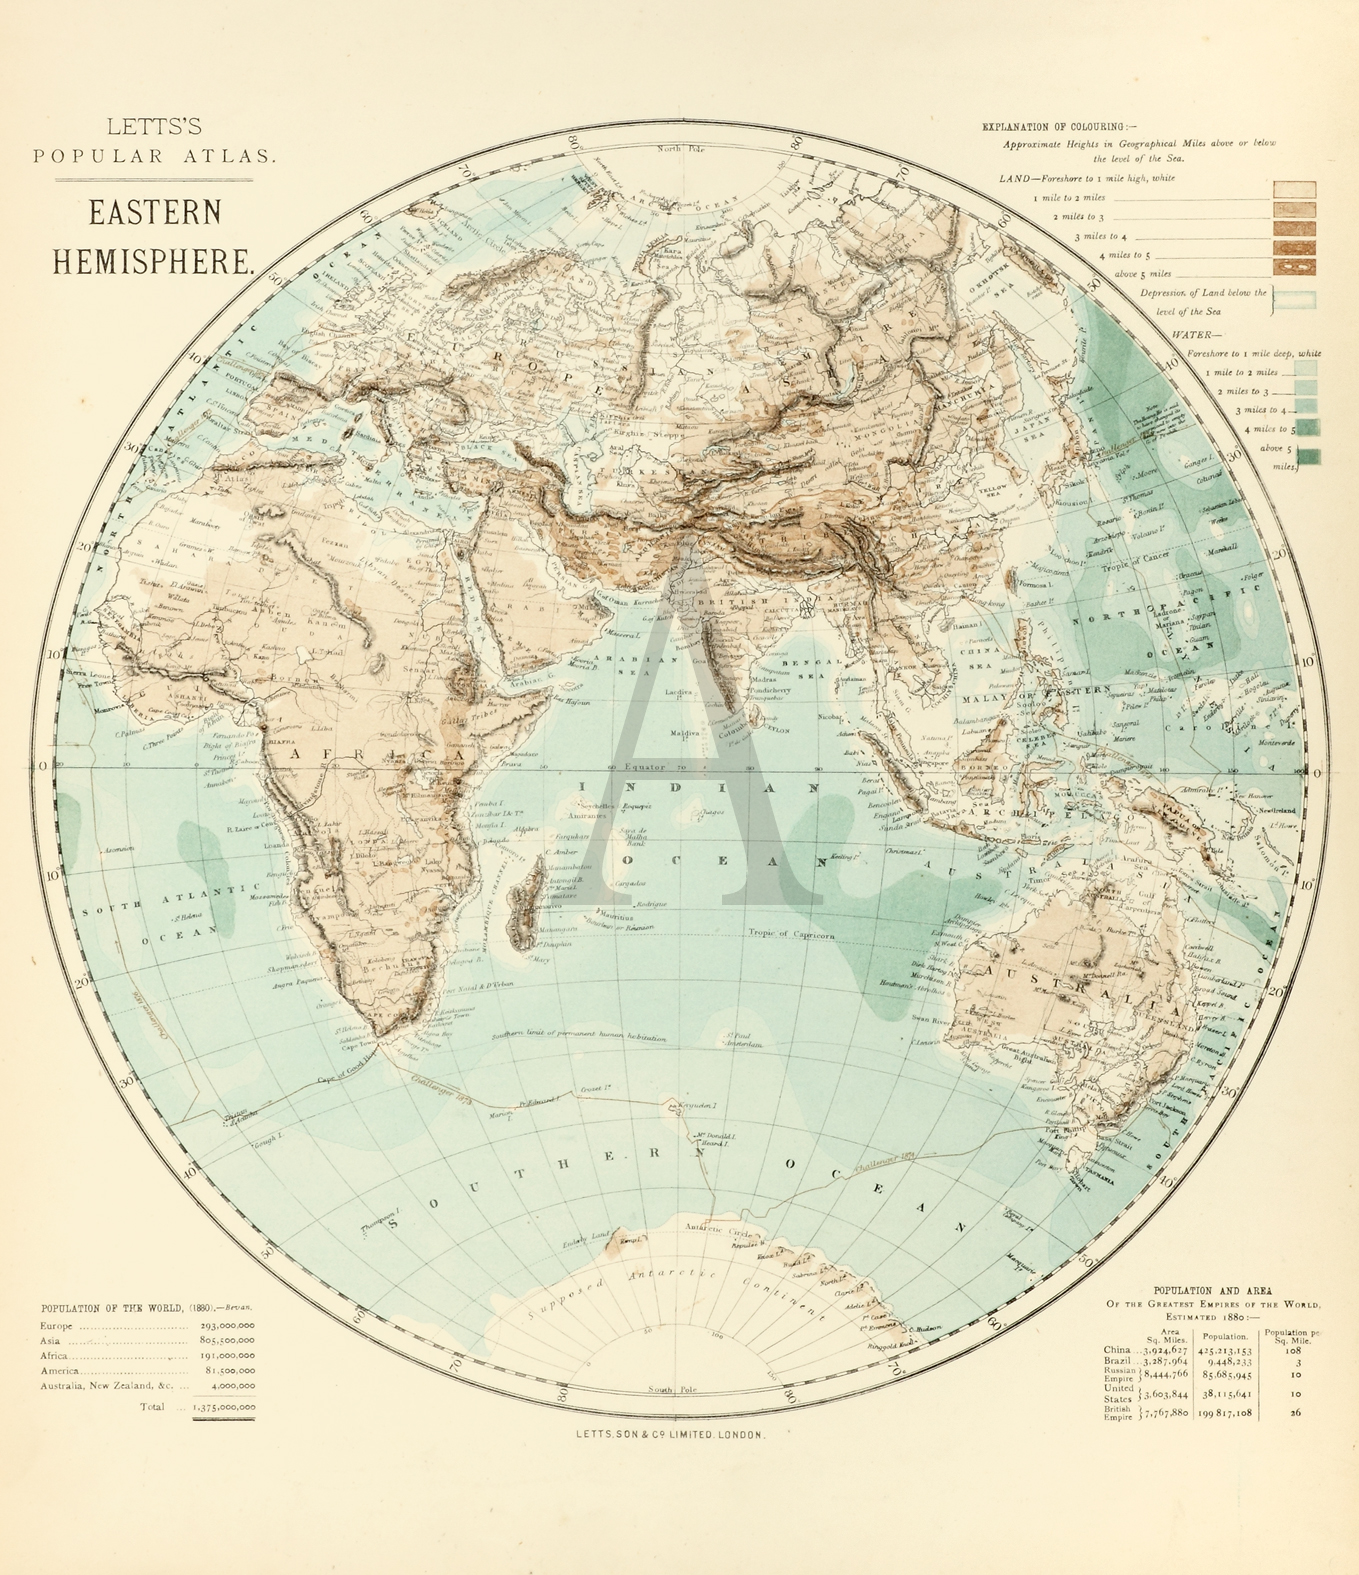 Eastern Hemisphere - Antique Print from 1881